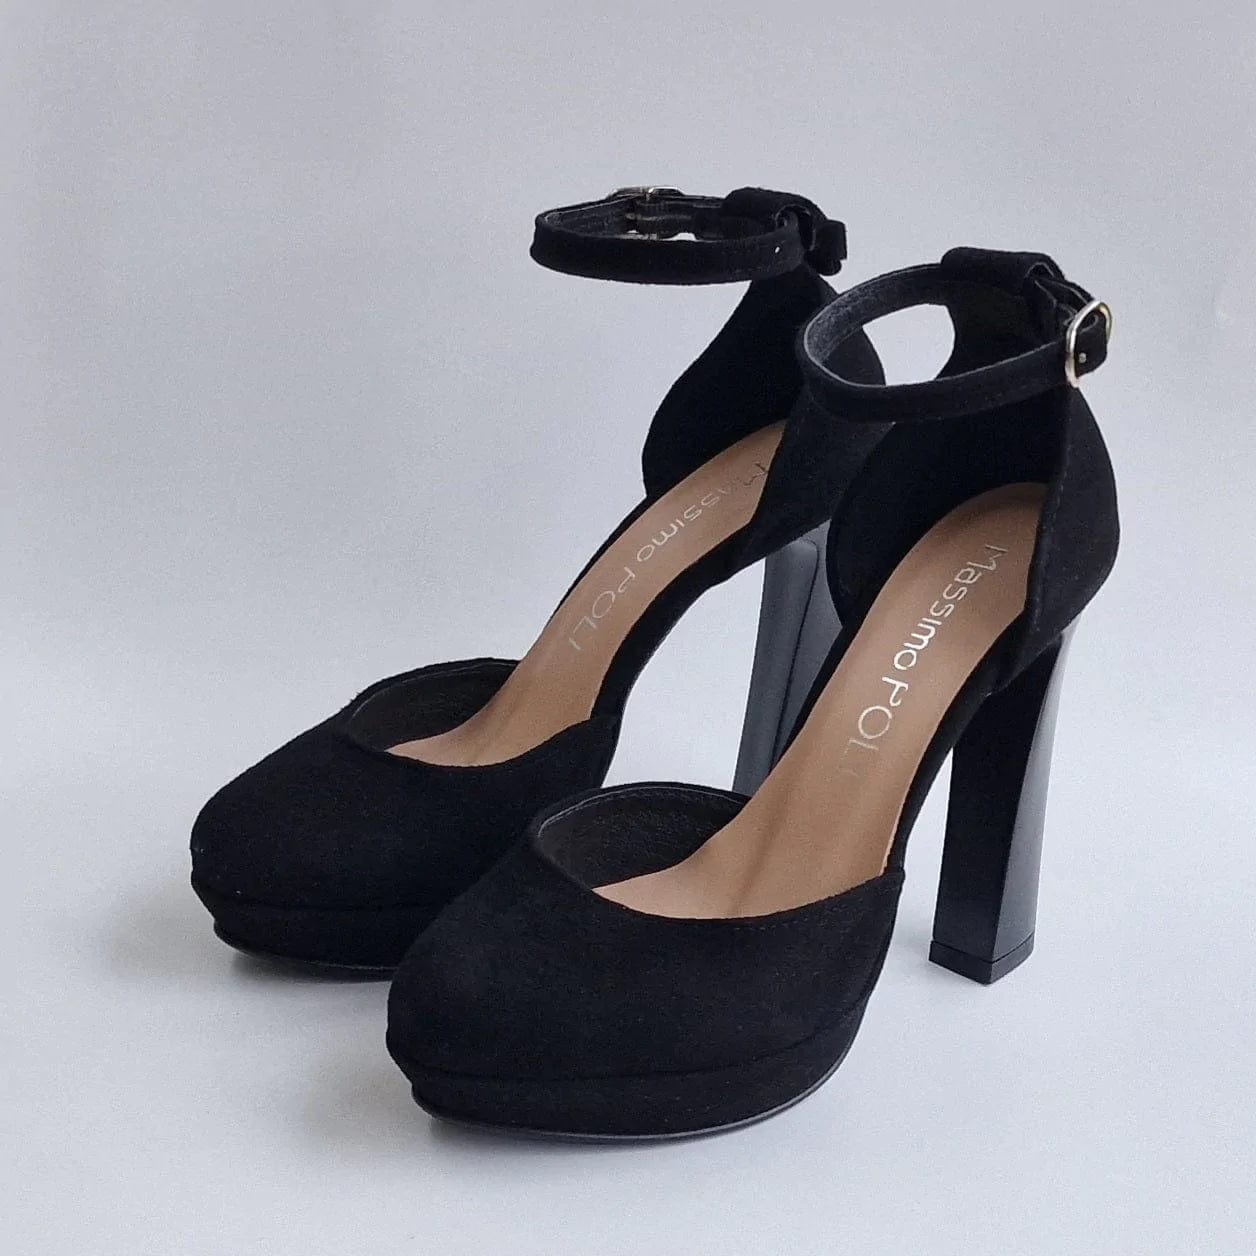 Black suede high heel platform sandals